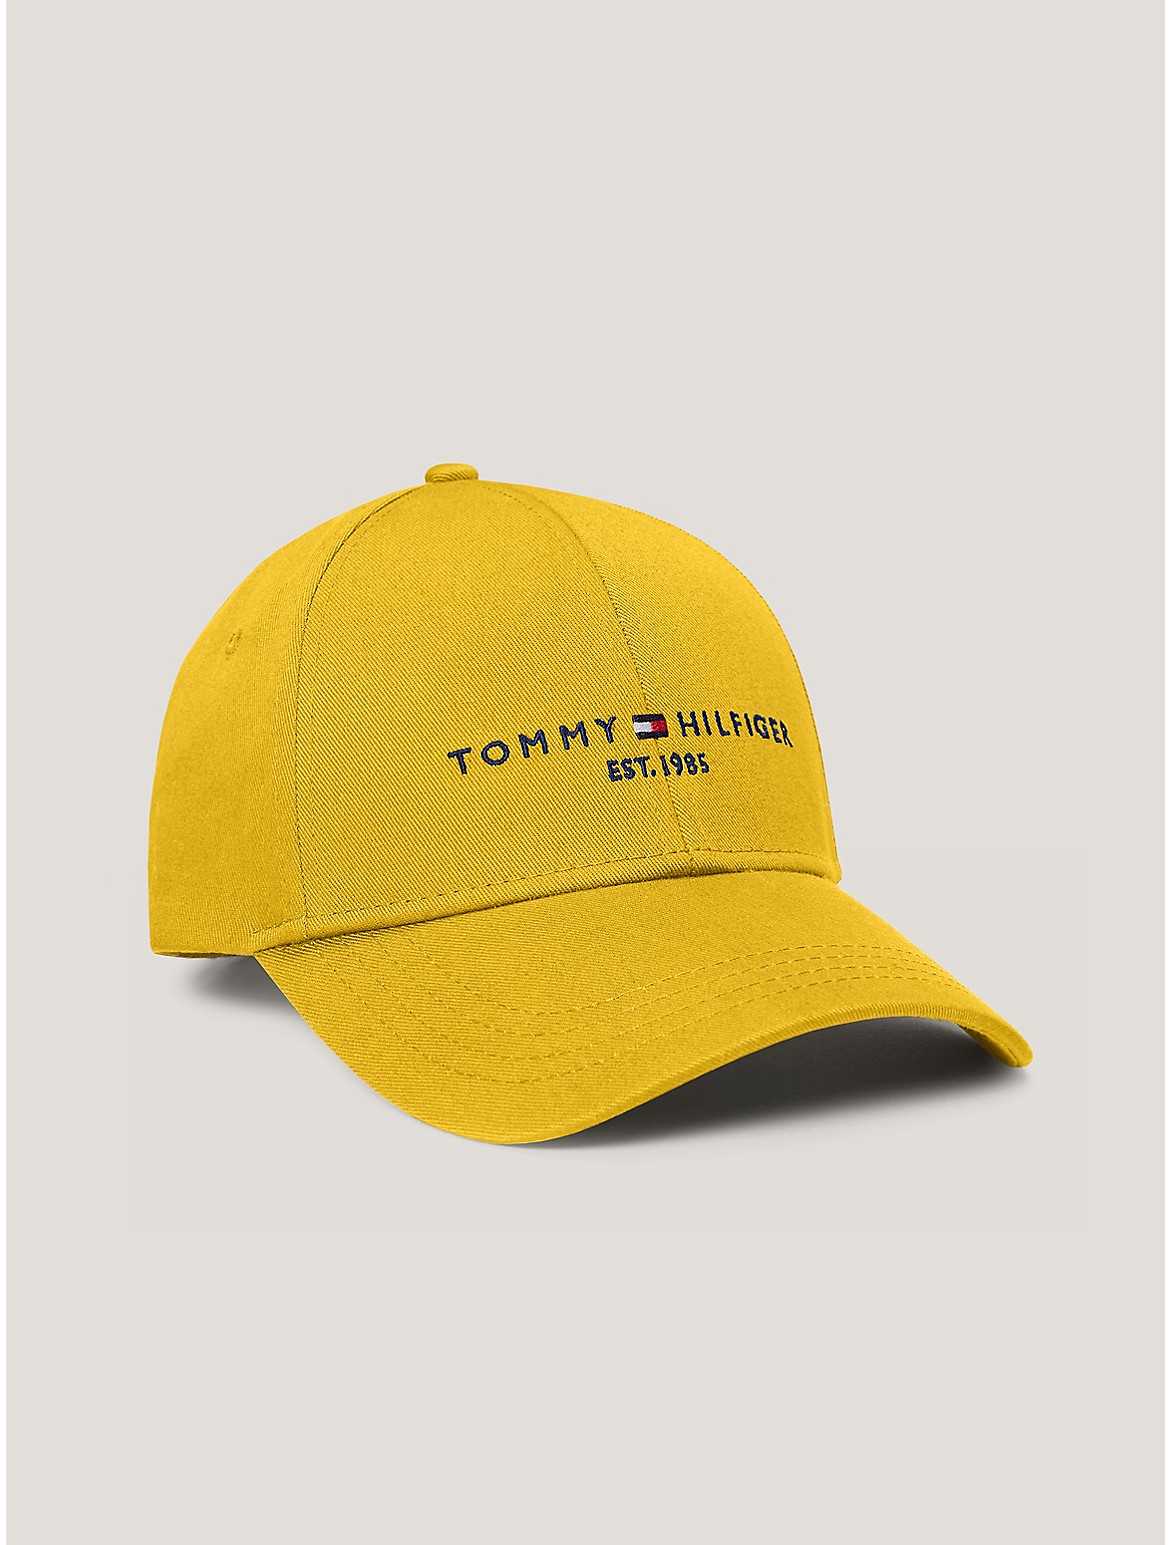 Tommy Hilfiger Men's Hilfiger Baseball Cap - Yellow